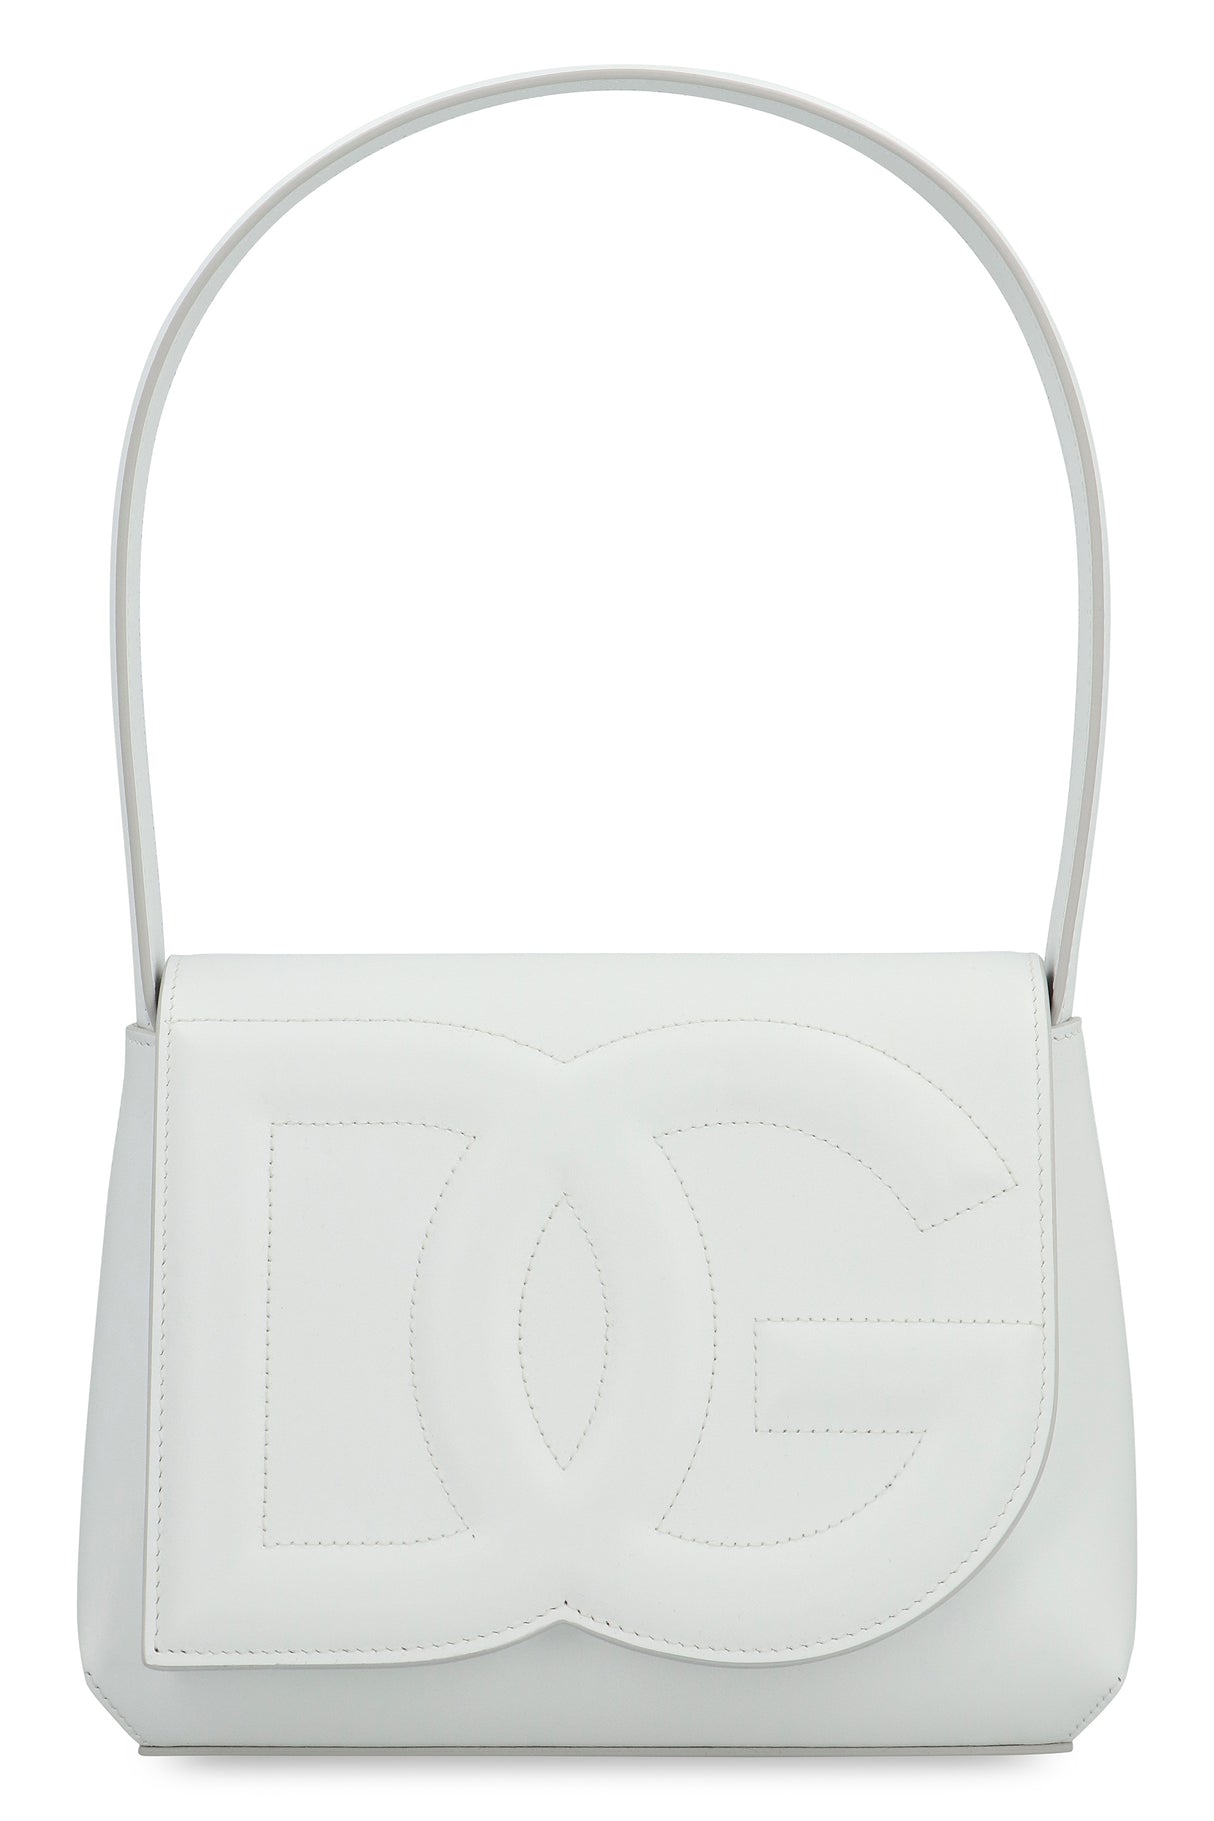 DOLCE & GABBANA DG Logo Leather Shoulder Handbag - White